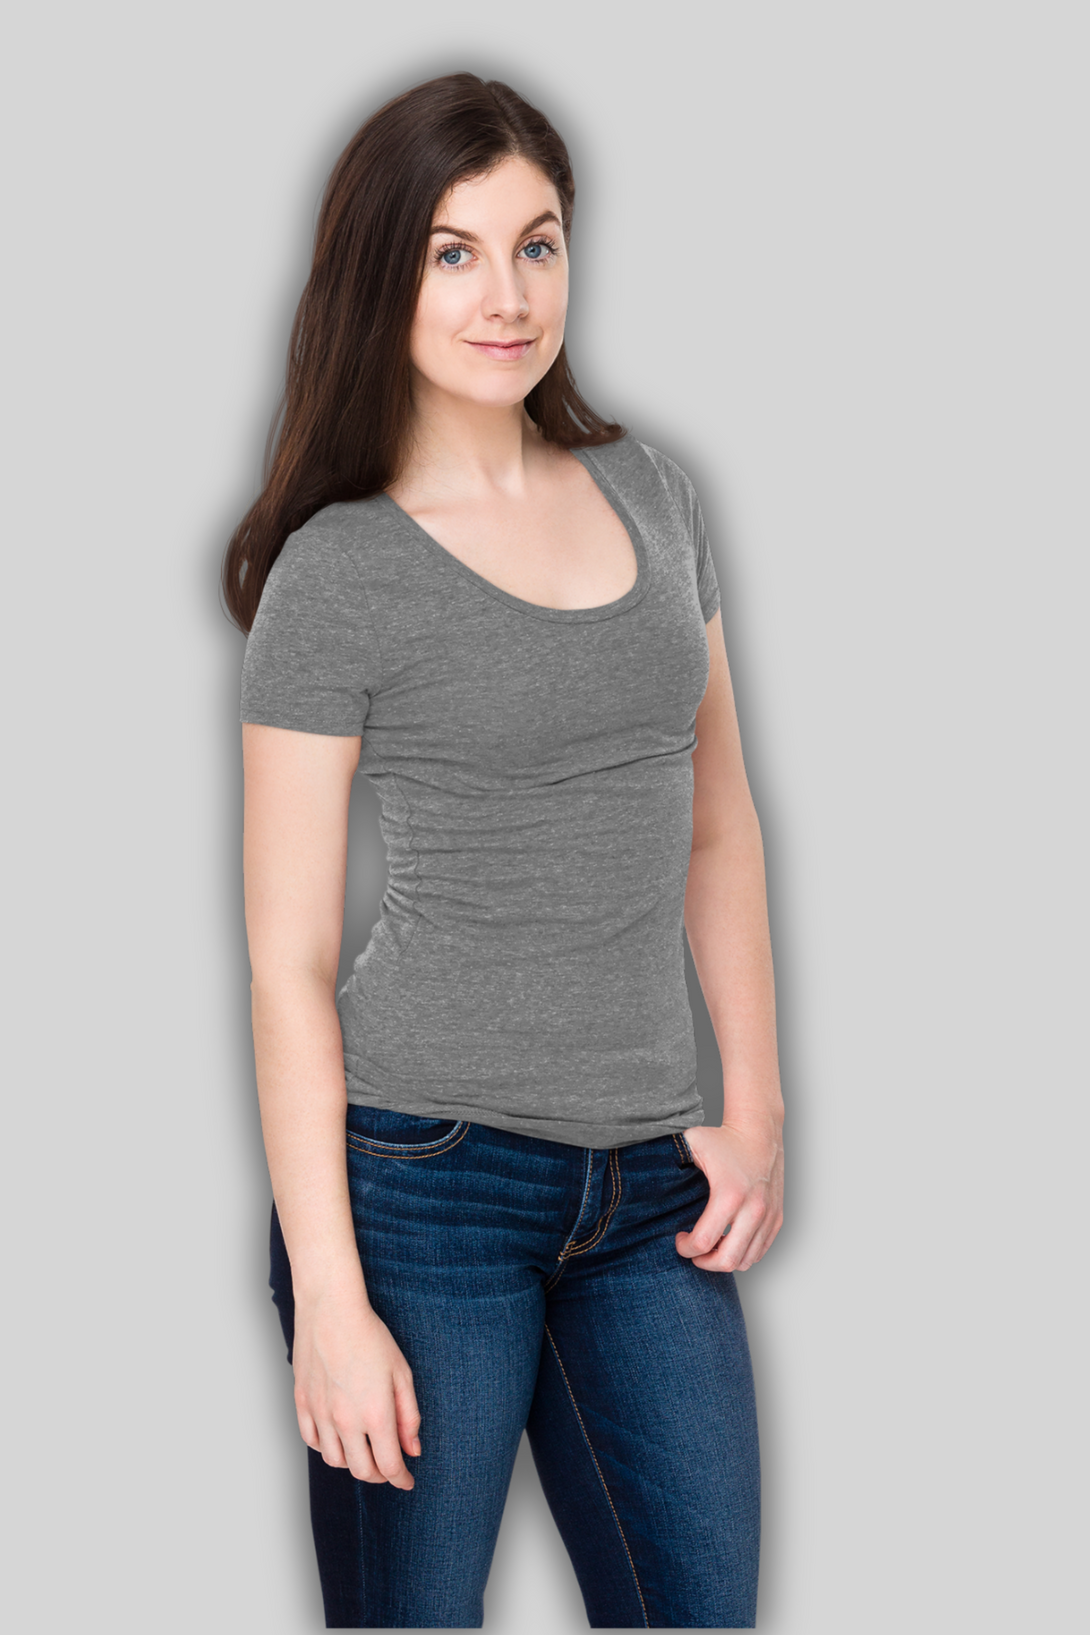 Charcoal Melange Scoop Neck T-Shirt For Women - WowWaves - 1